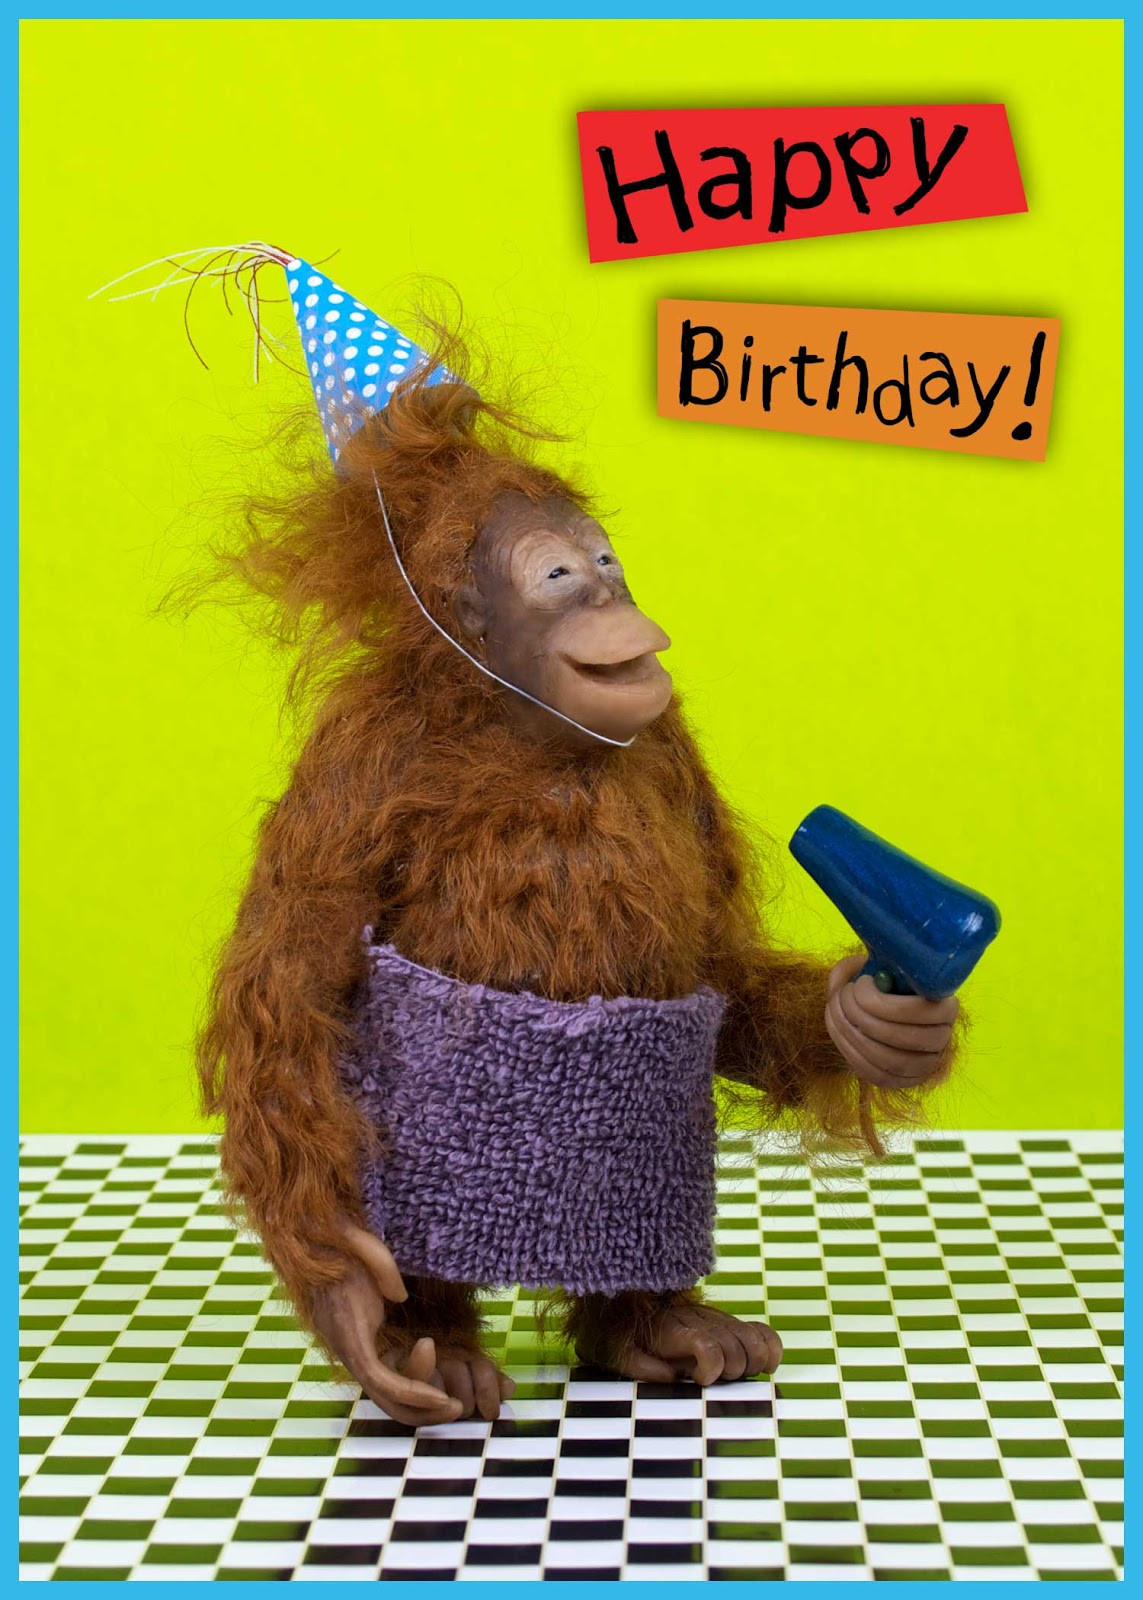 Happy Birthday Greetings Funny
 Caroline Gray Work in Progress Kids’ Birthday Cards